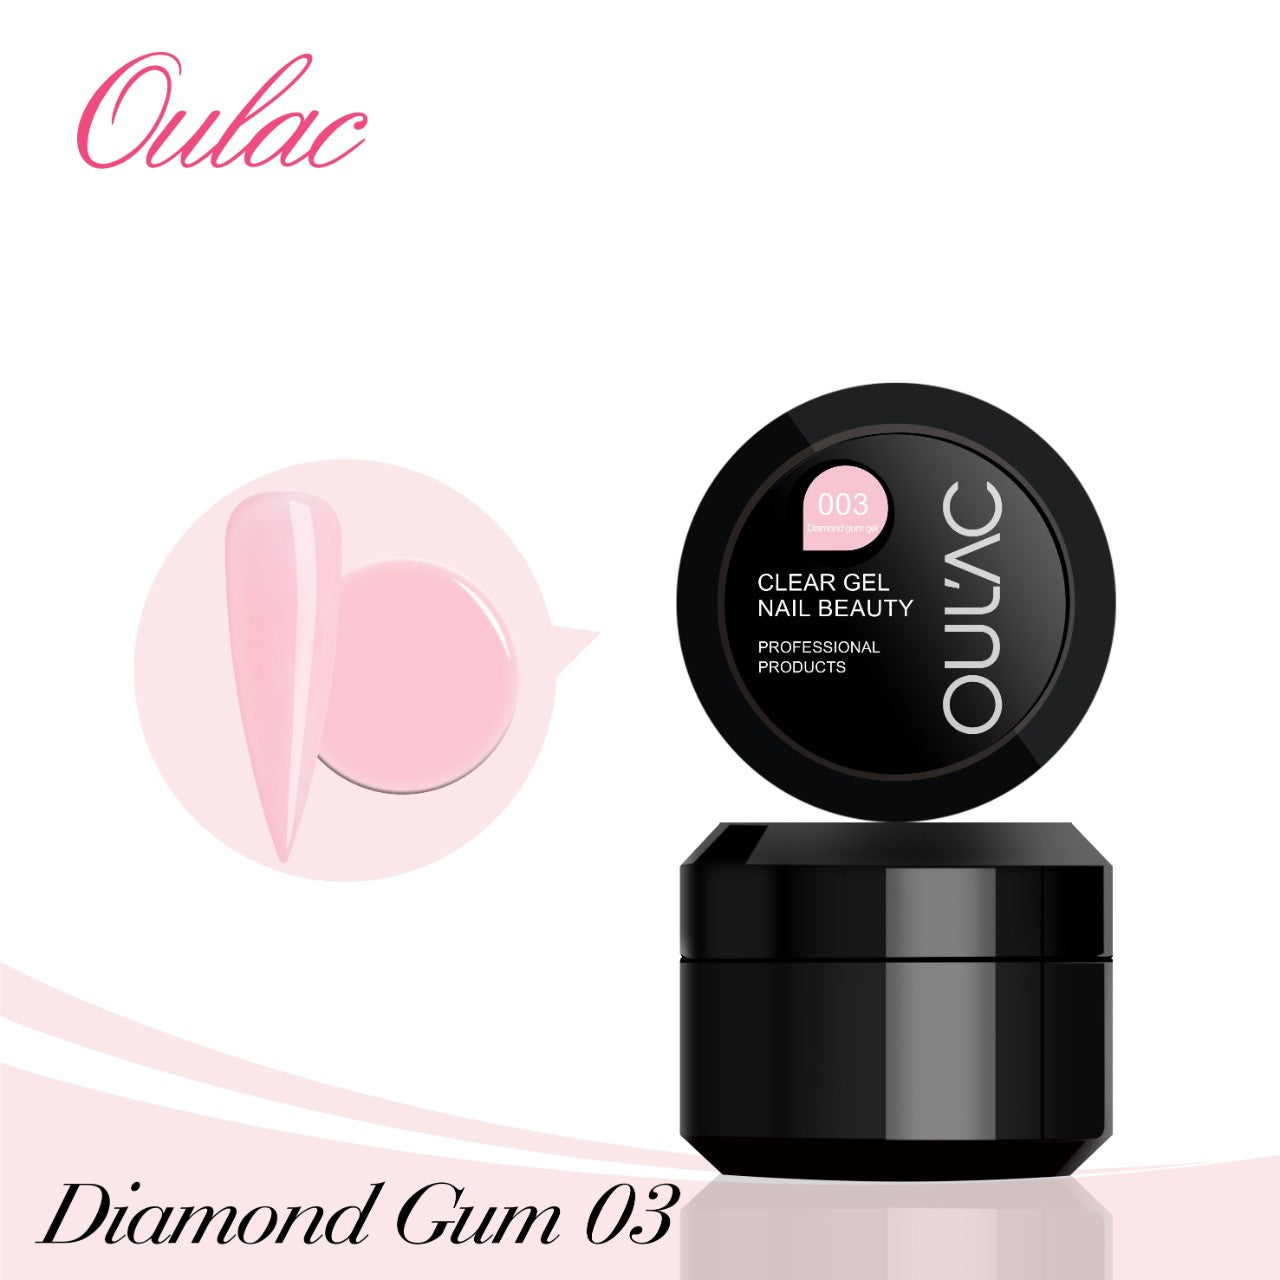 Acrygel / Diamond Gum Gel Soft Clear Pink 03 - 30ml